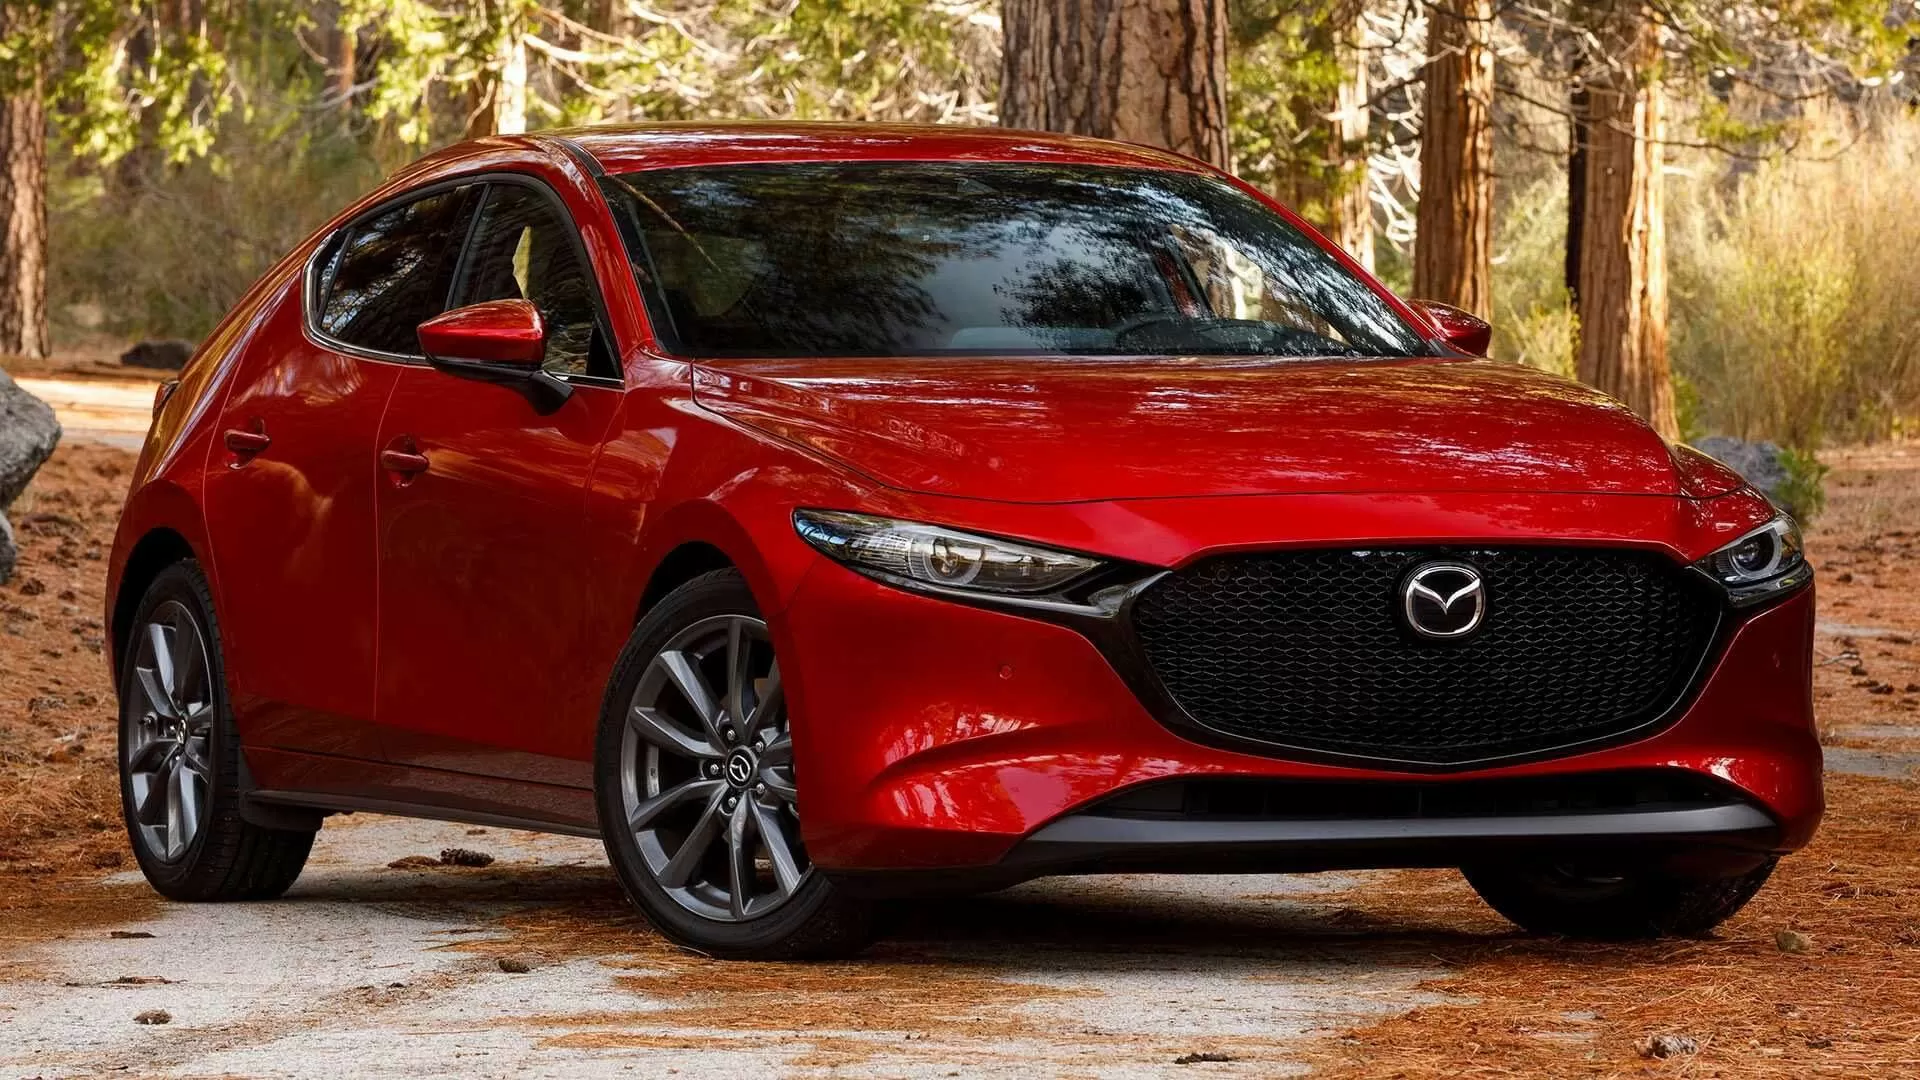 Mazda recalling 35,000 vehicles over faulty emergency brake system